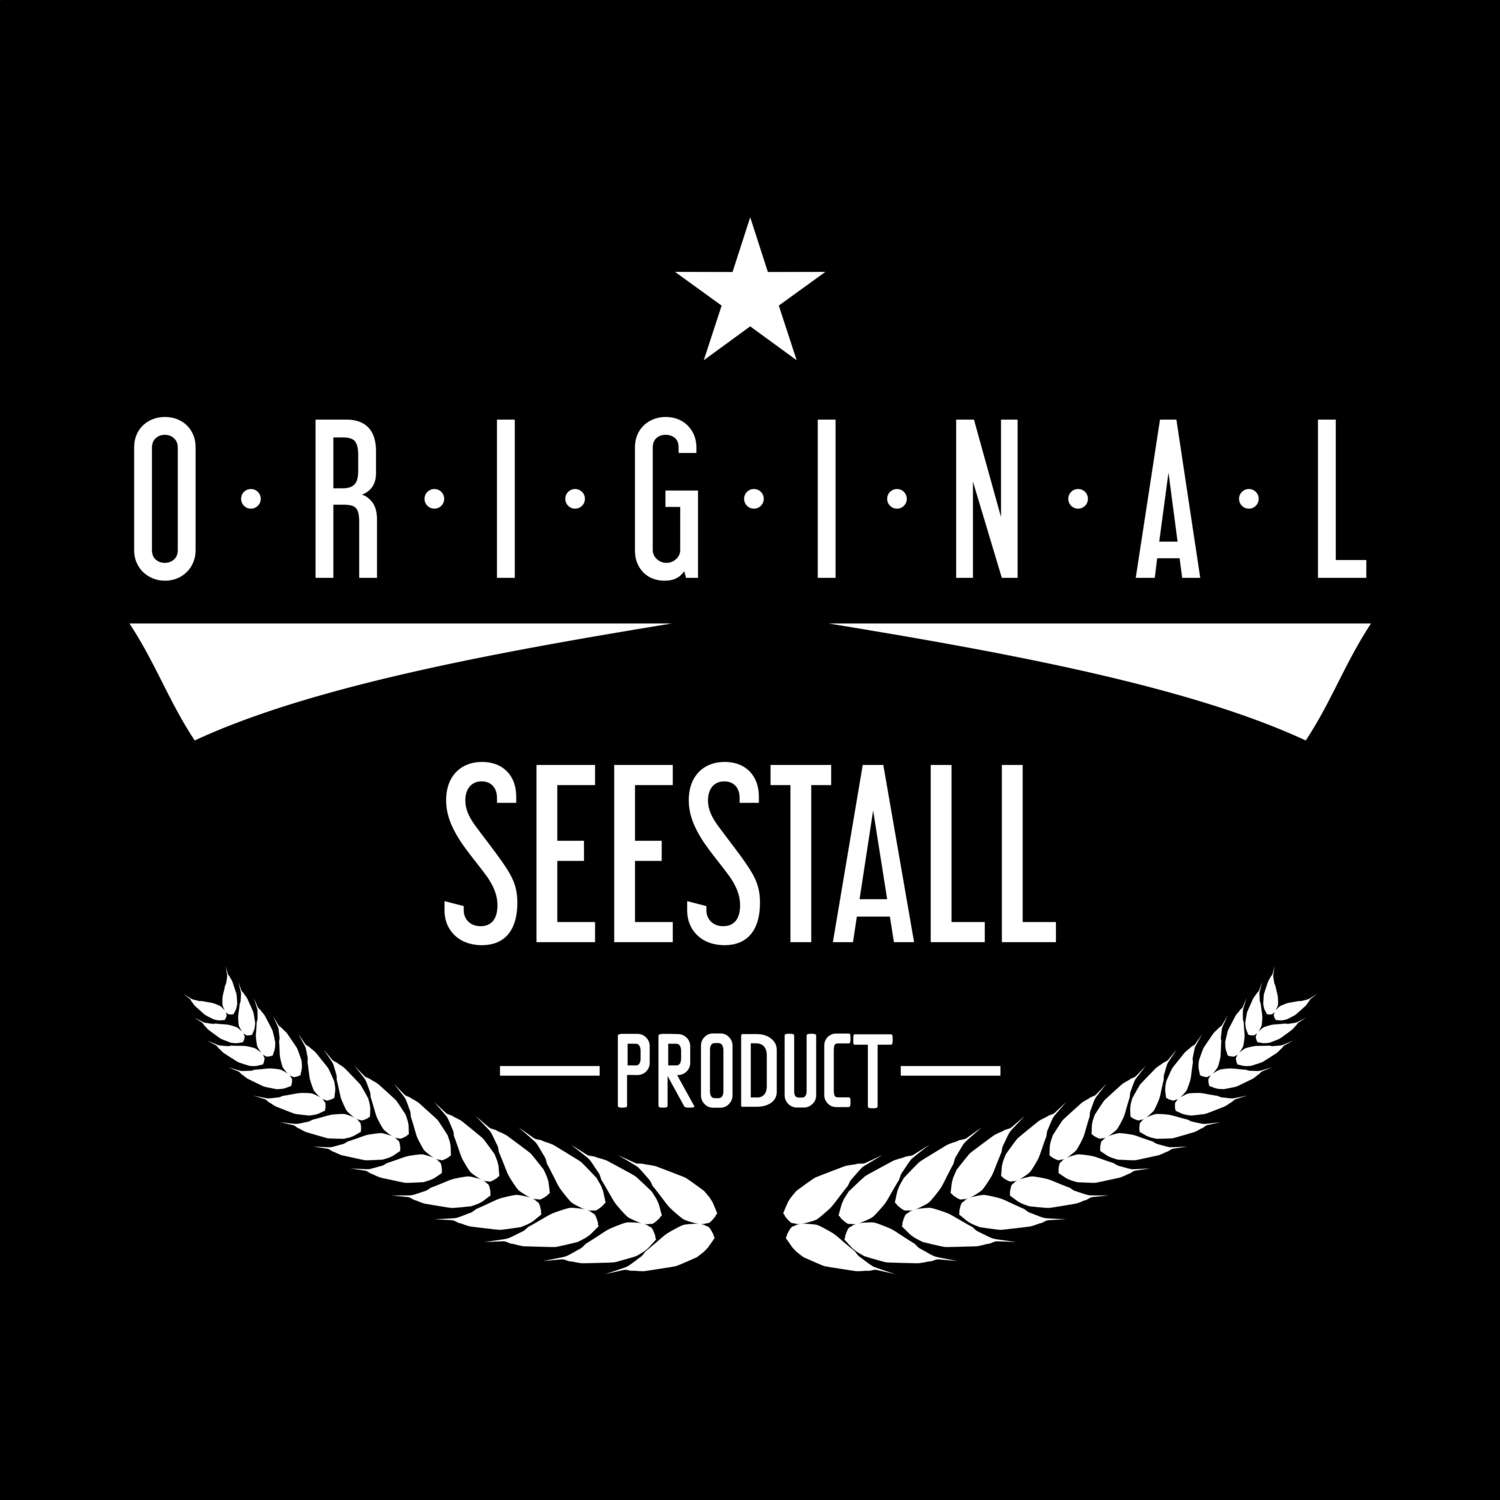 Seestall T-Shirt »Original Product«